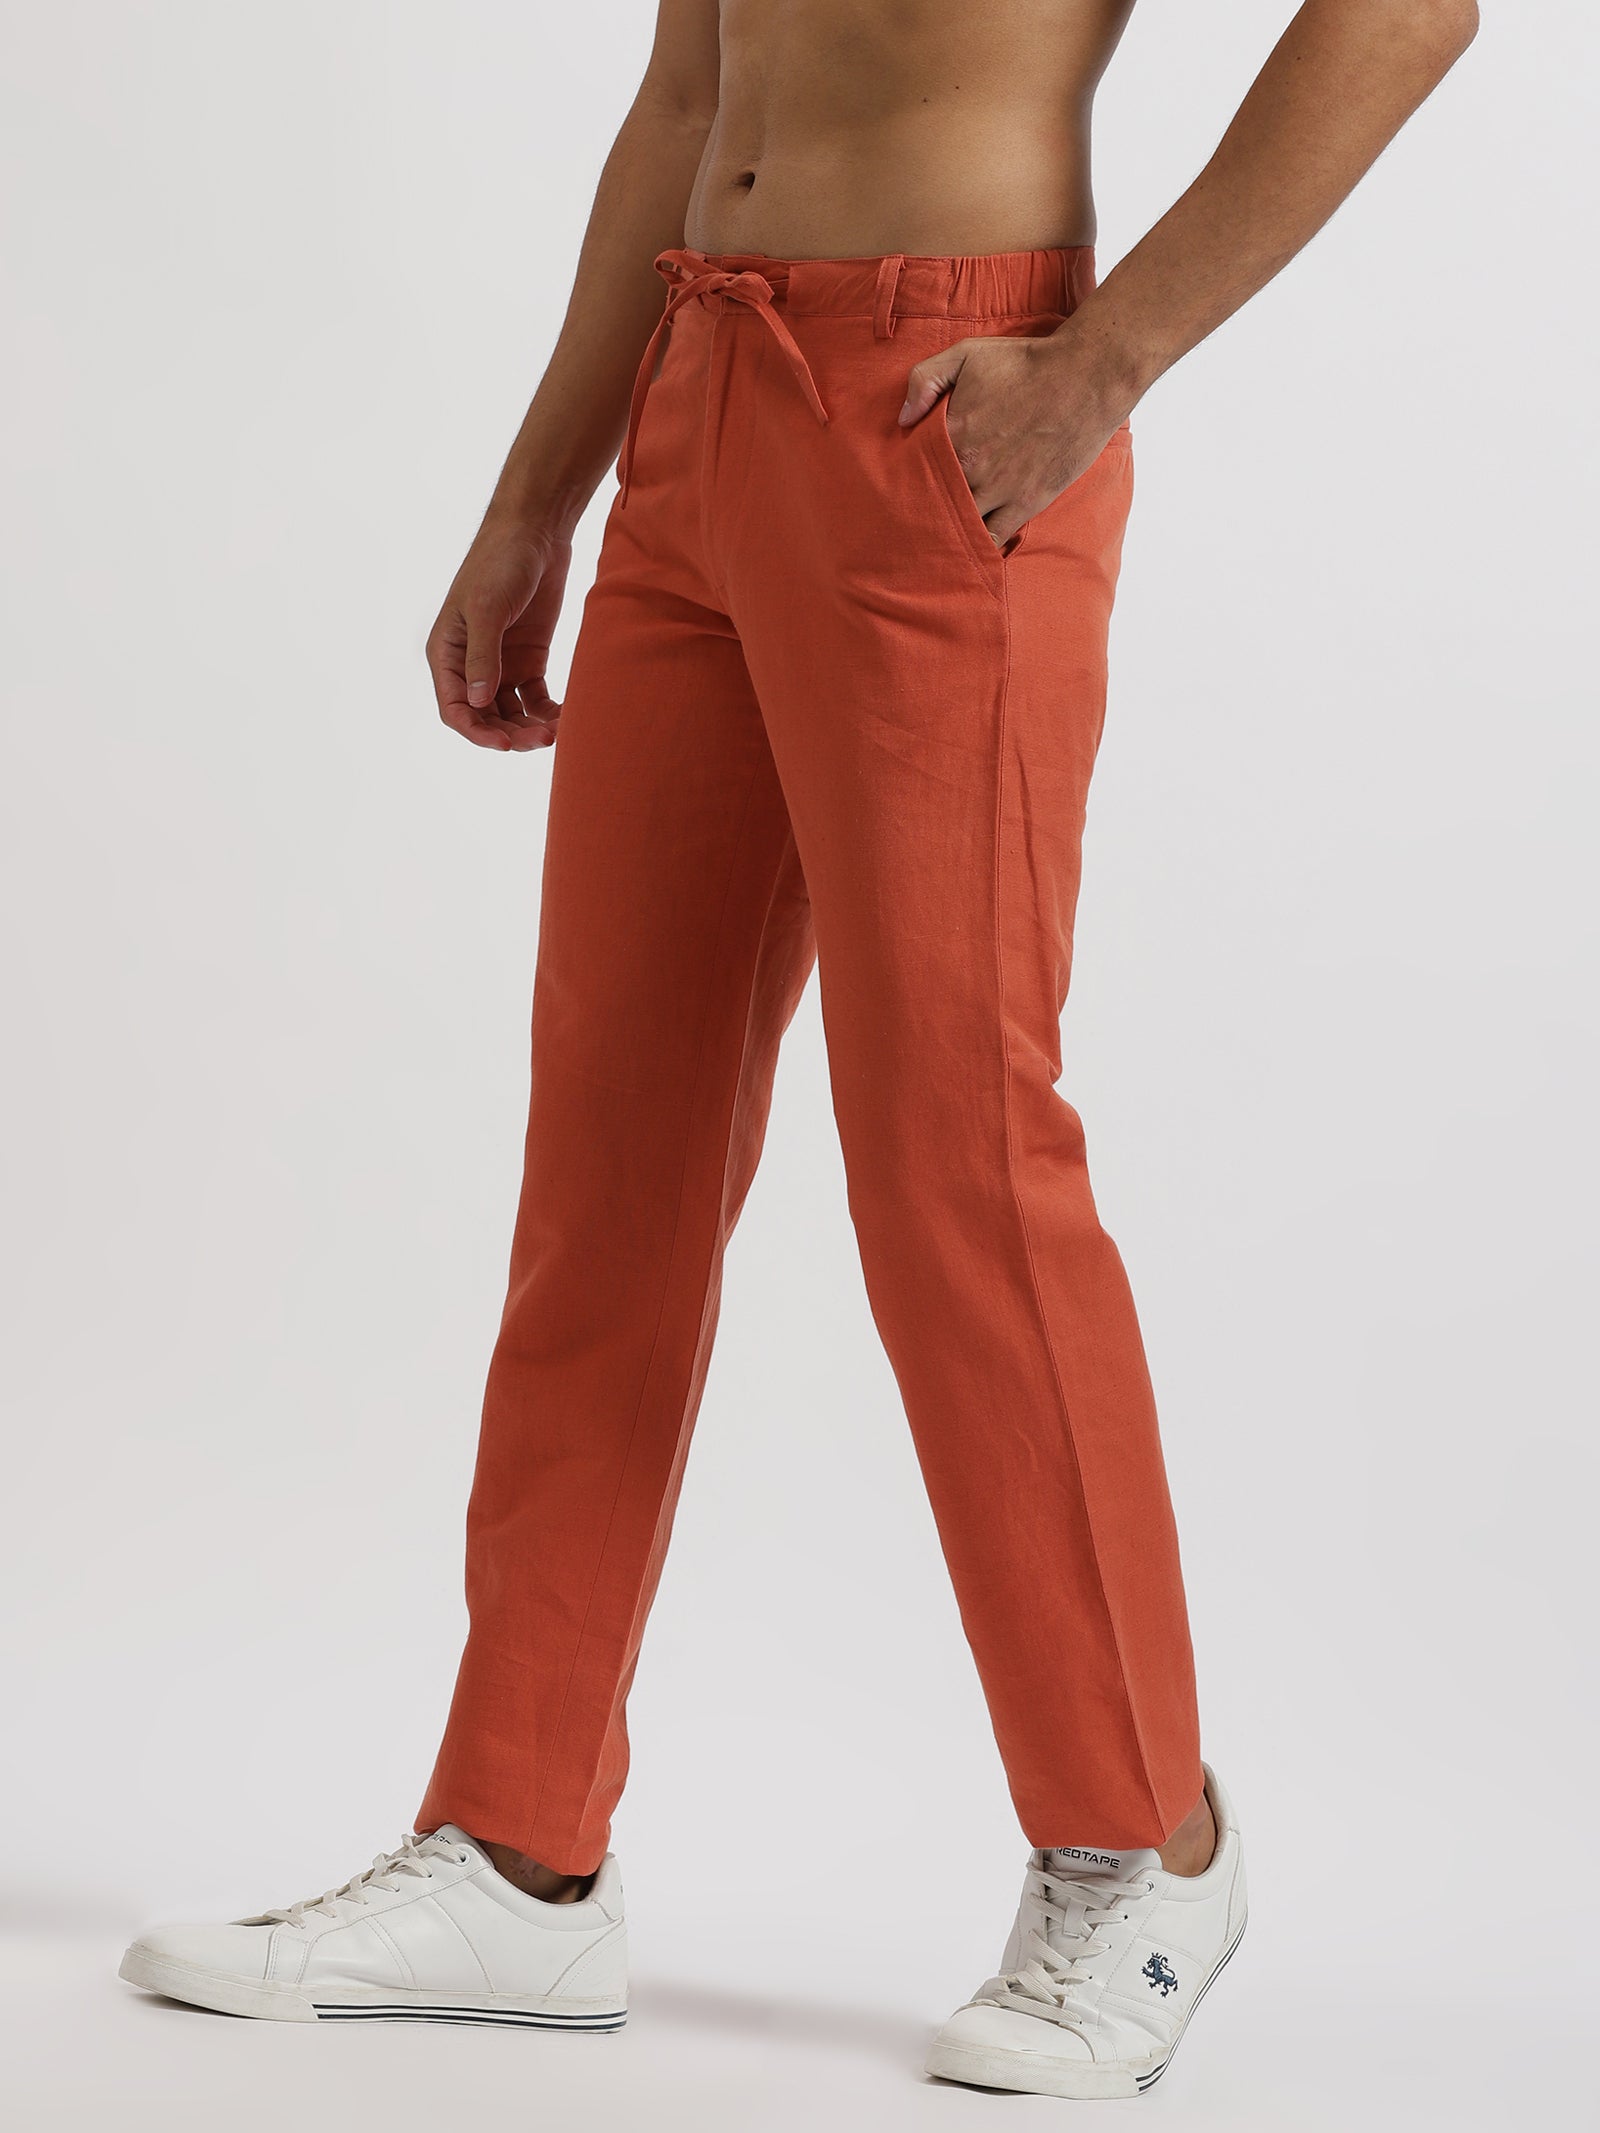 Polo Ralph Lauren L2304 Mens Orange Linen Double-Pleated Trouser Size 34x33  | eBay